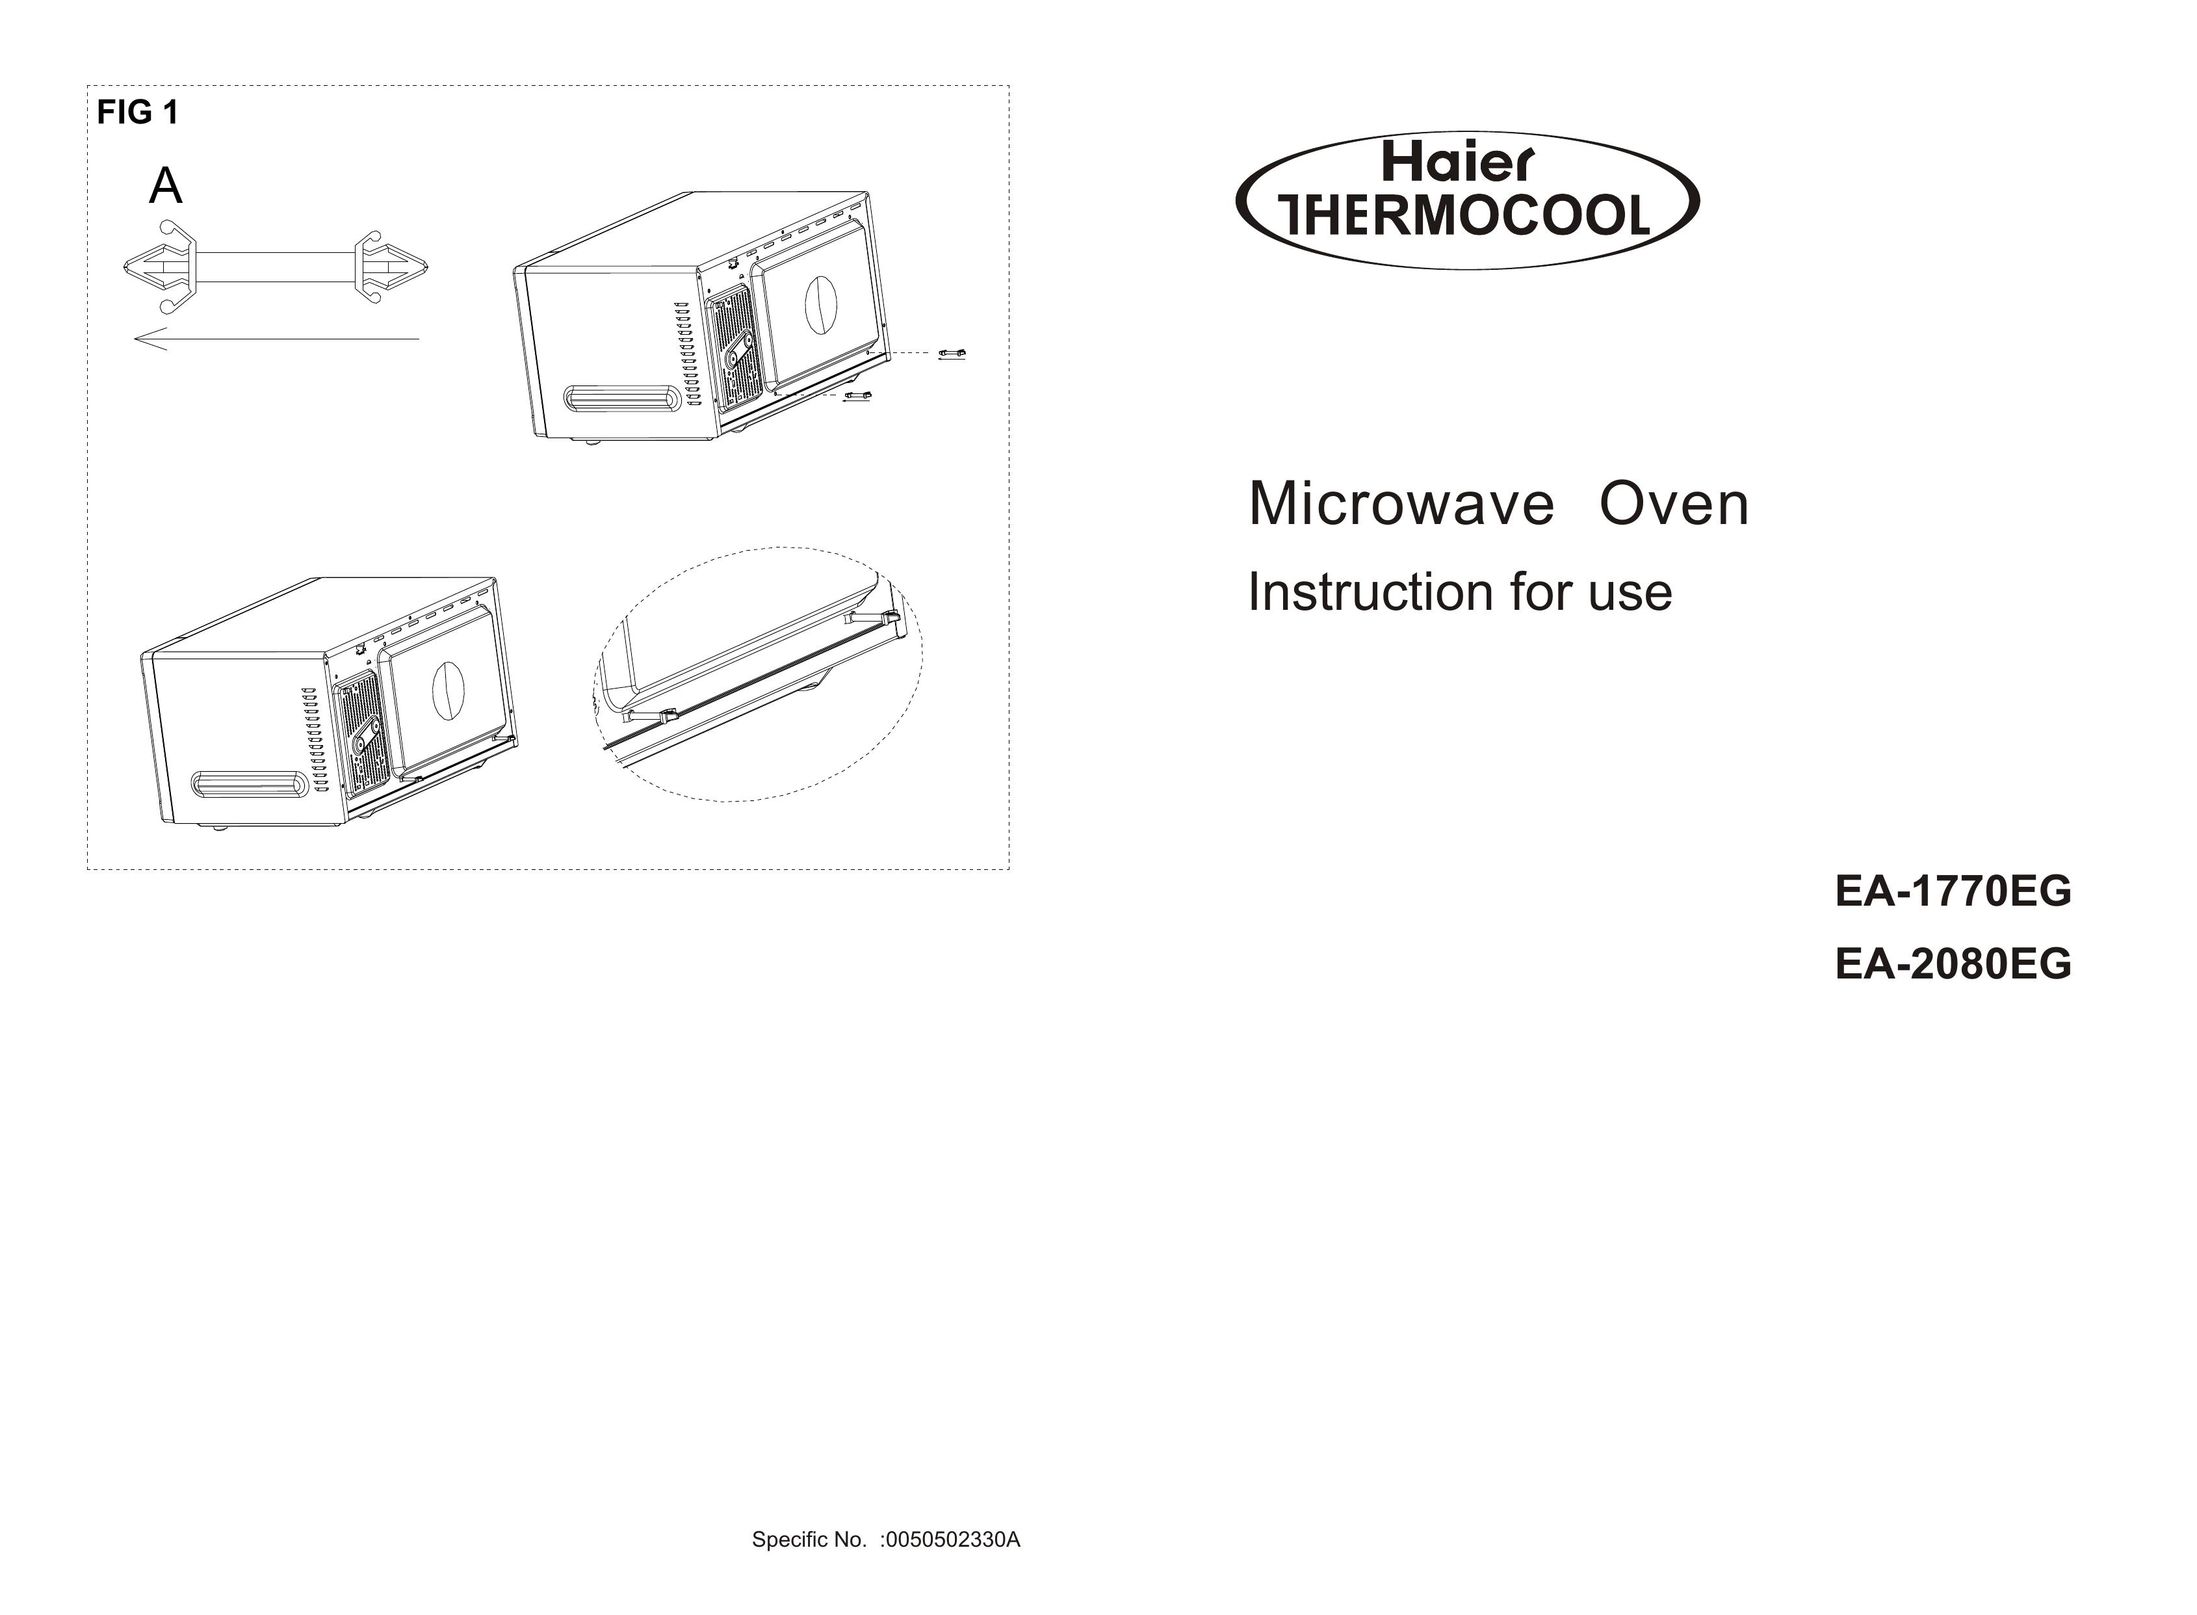 Haier EA-1770EG Microwave Oven User Manual